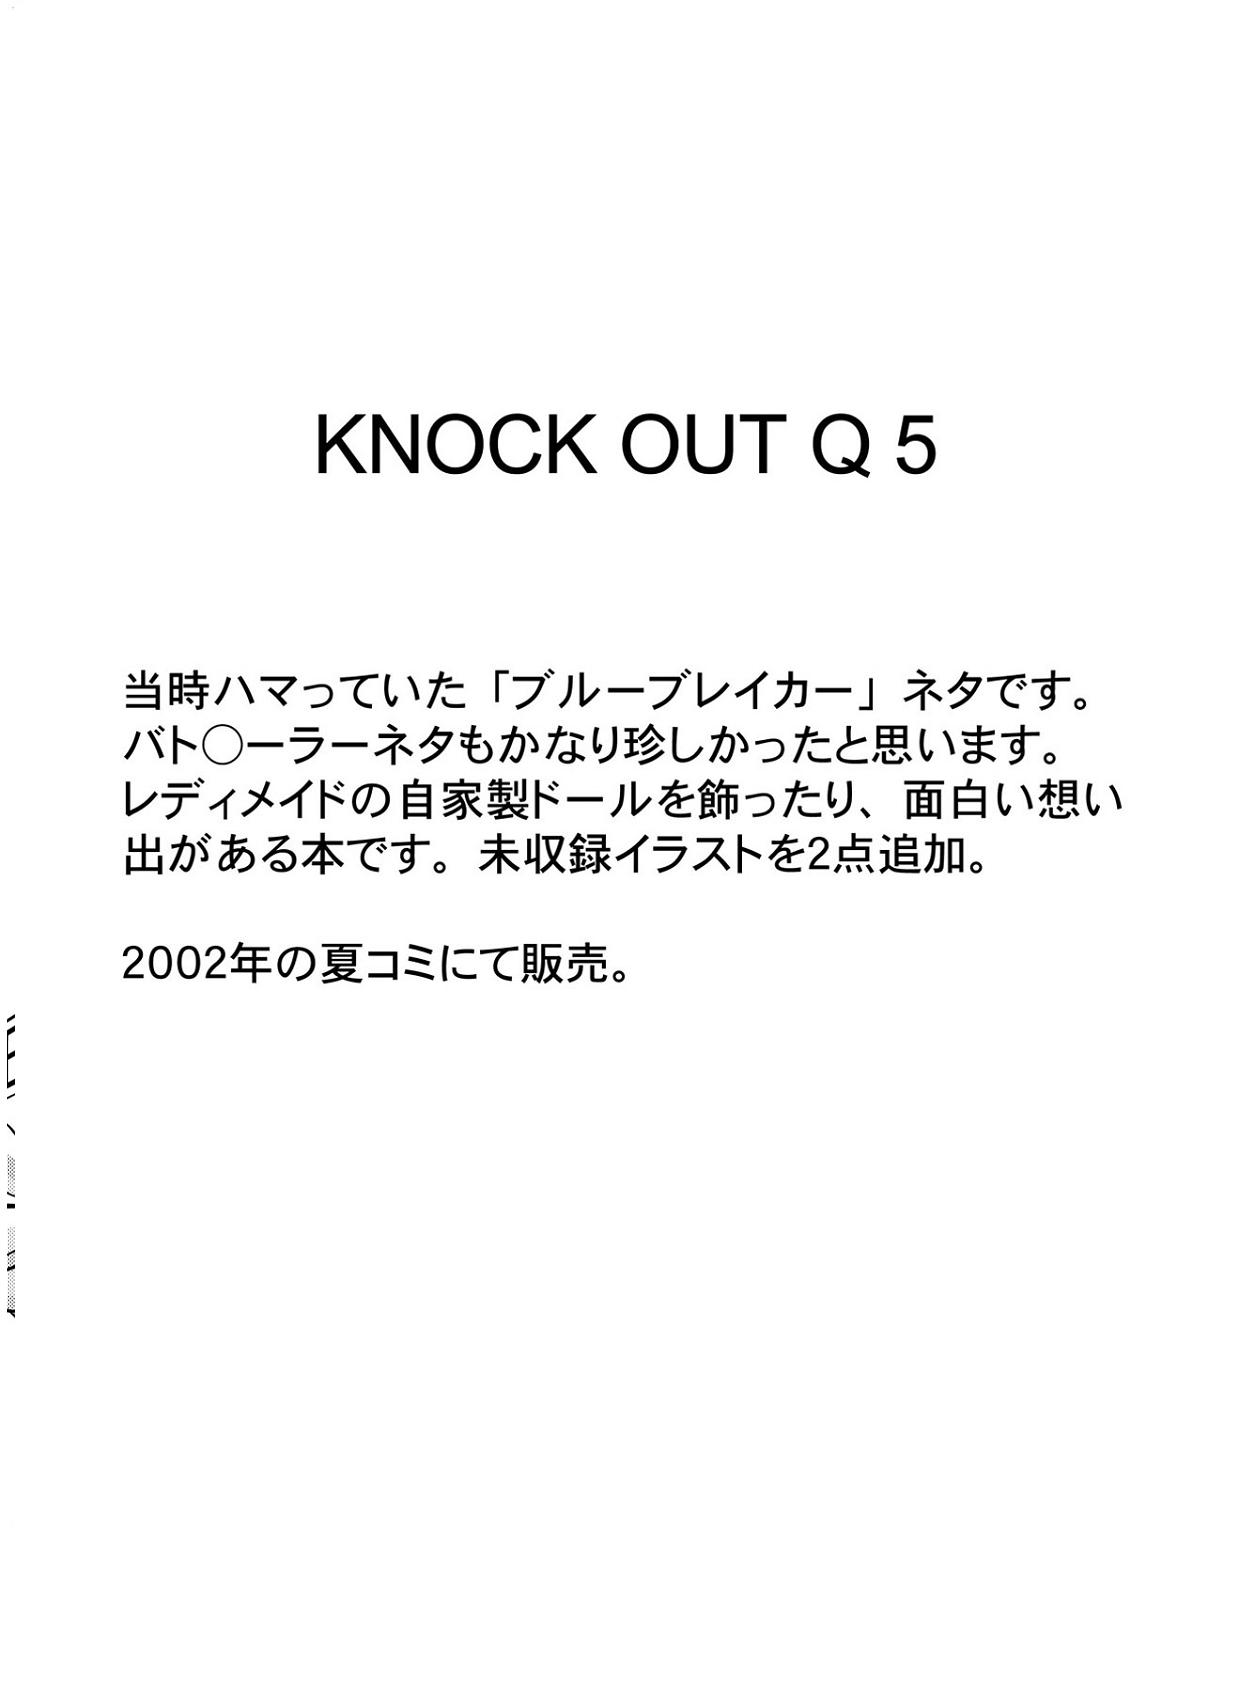 Knockout-Q 43